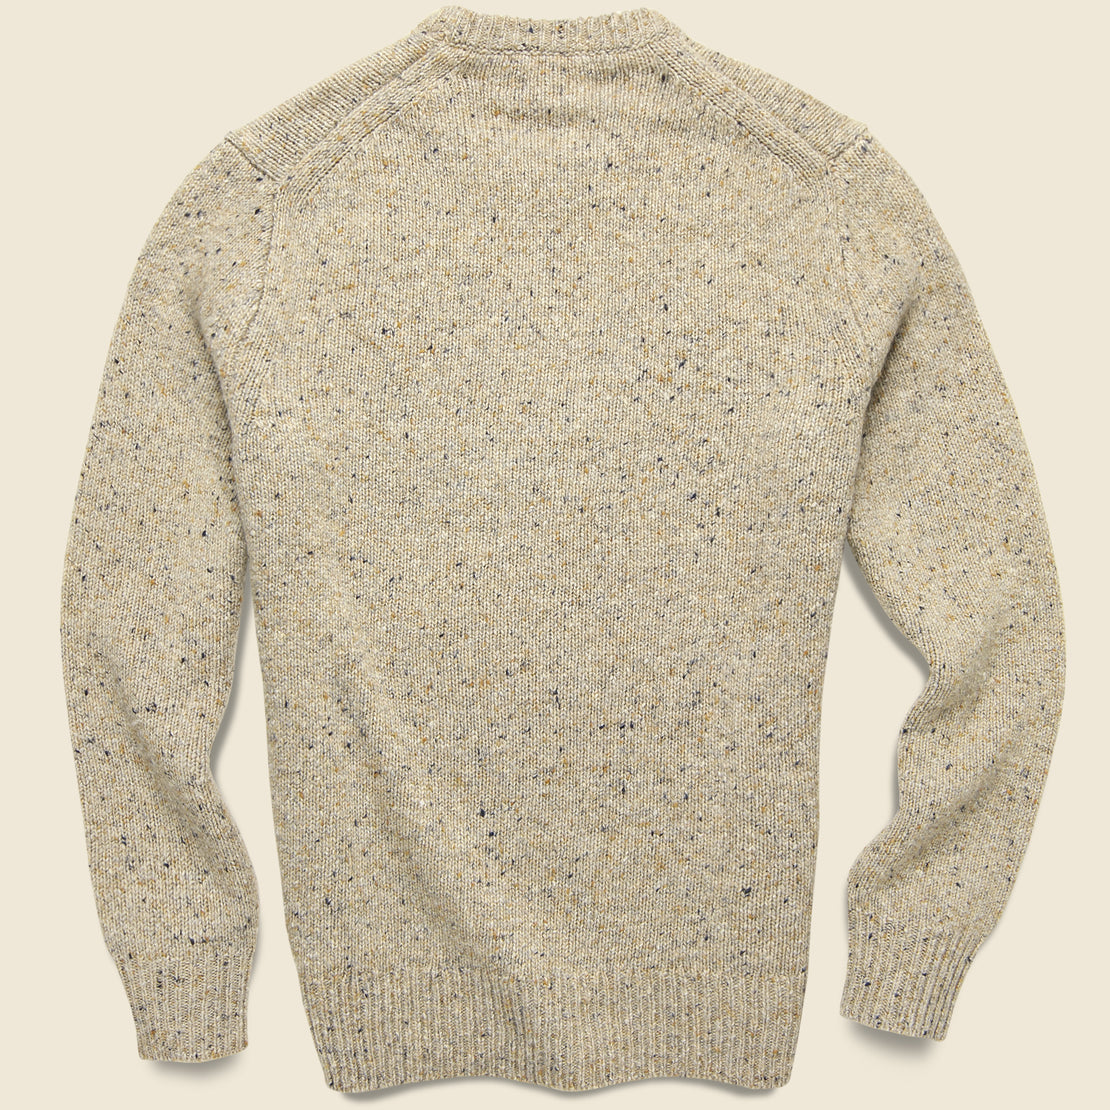 Donegal Wool Sweater - Oatmeal